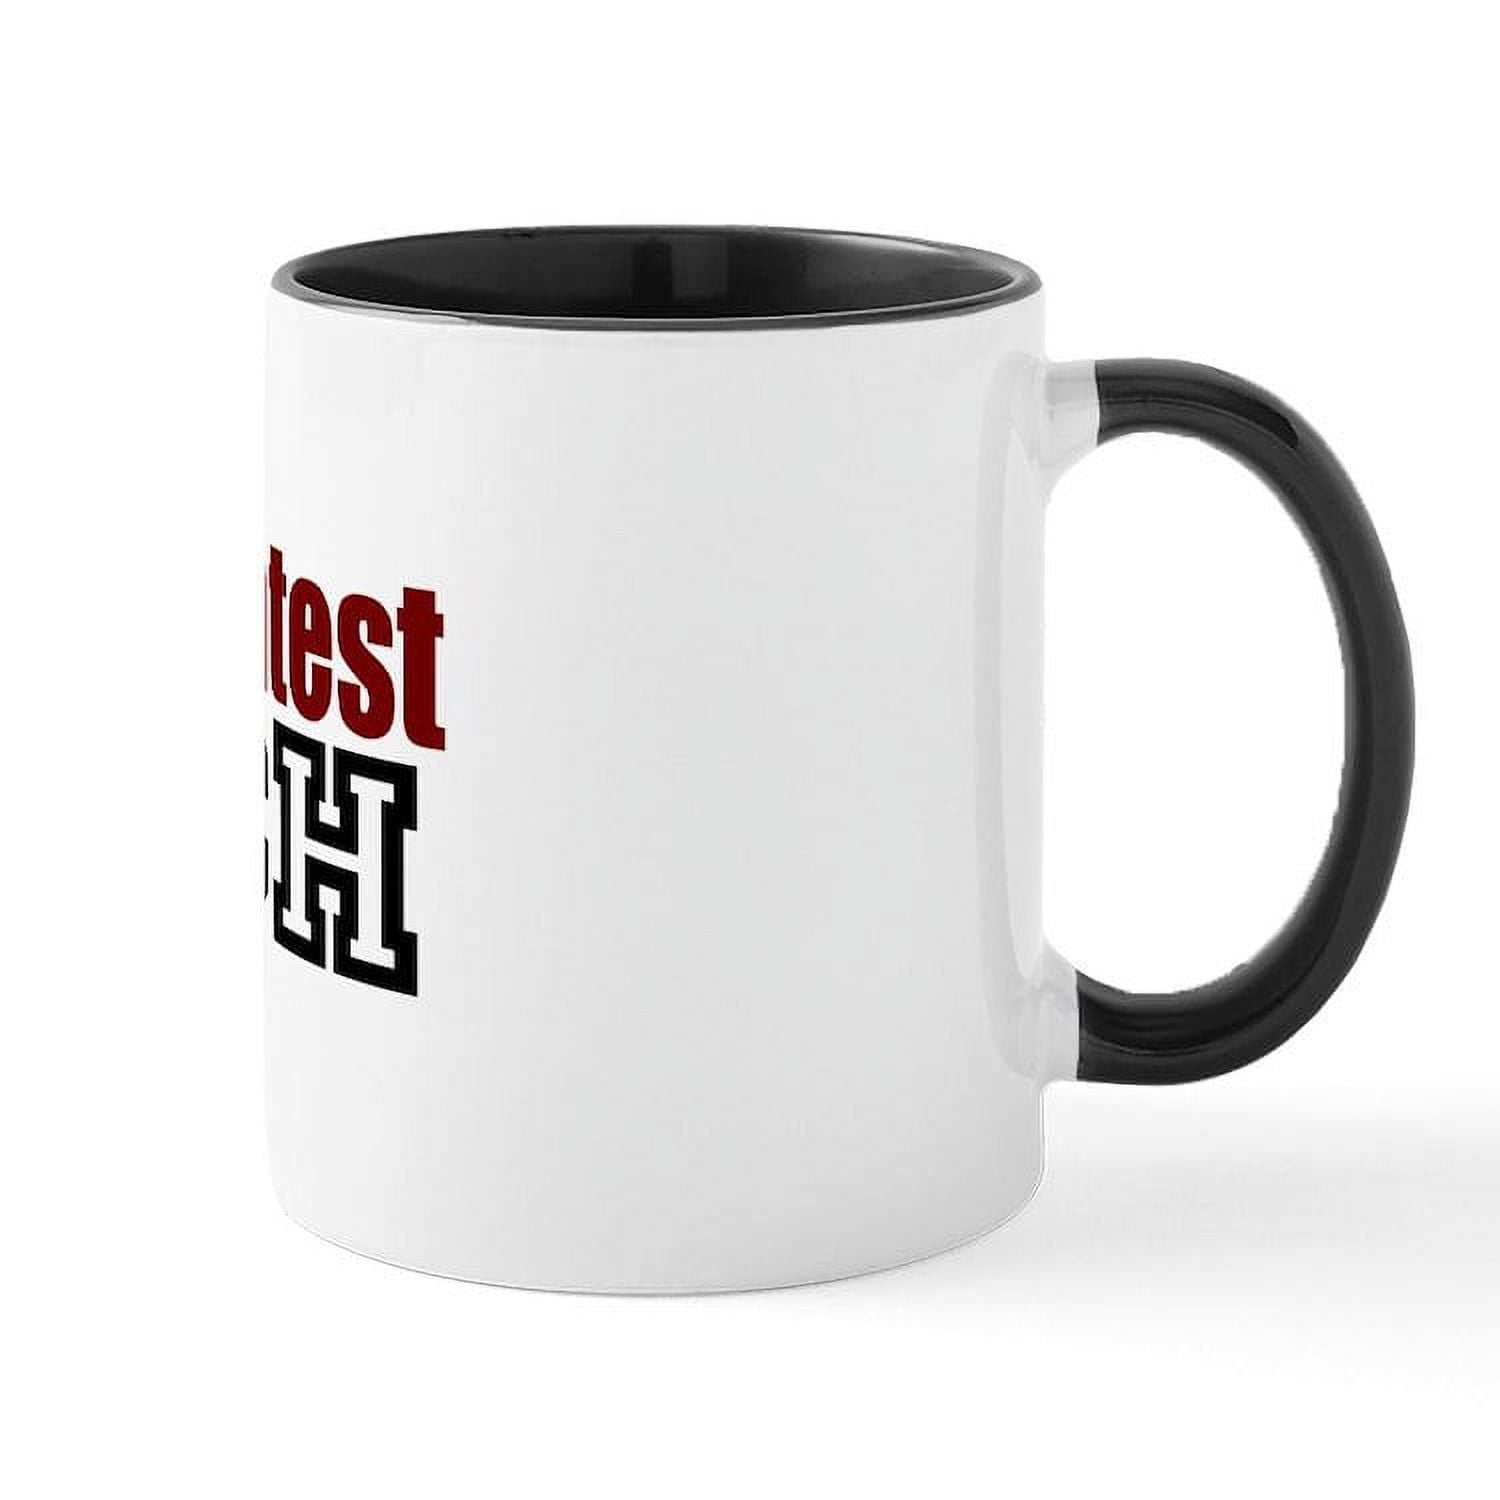  CafePress Worlds Best Coach Mugs 11 oz (325 ml) Ceramic Coffee  Mug : Home & Kitchen